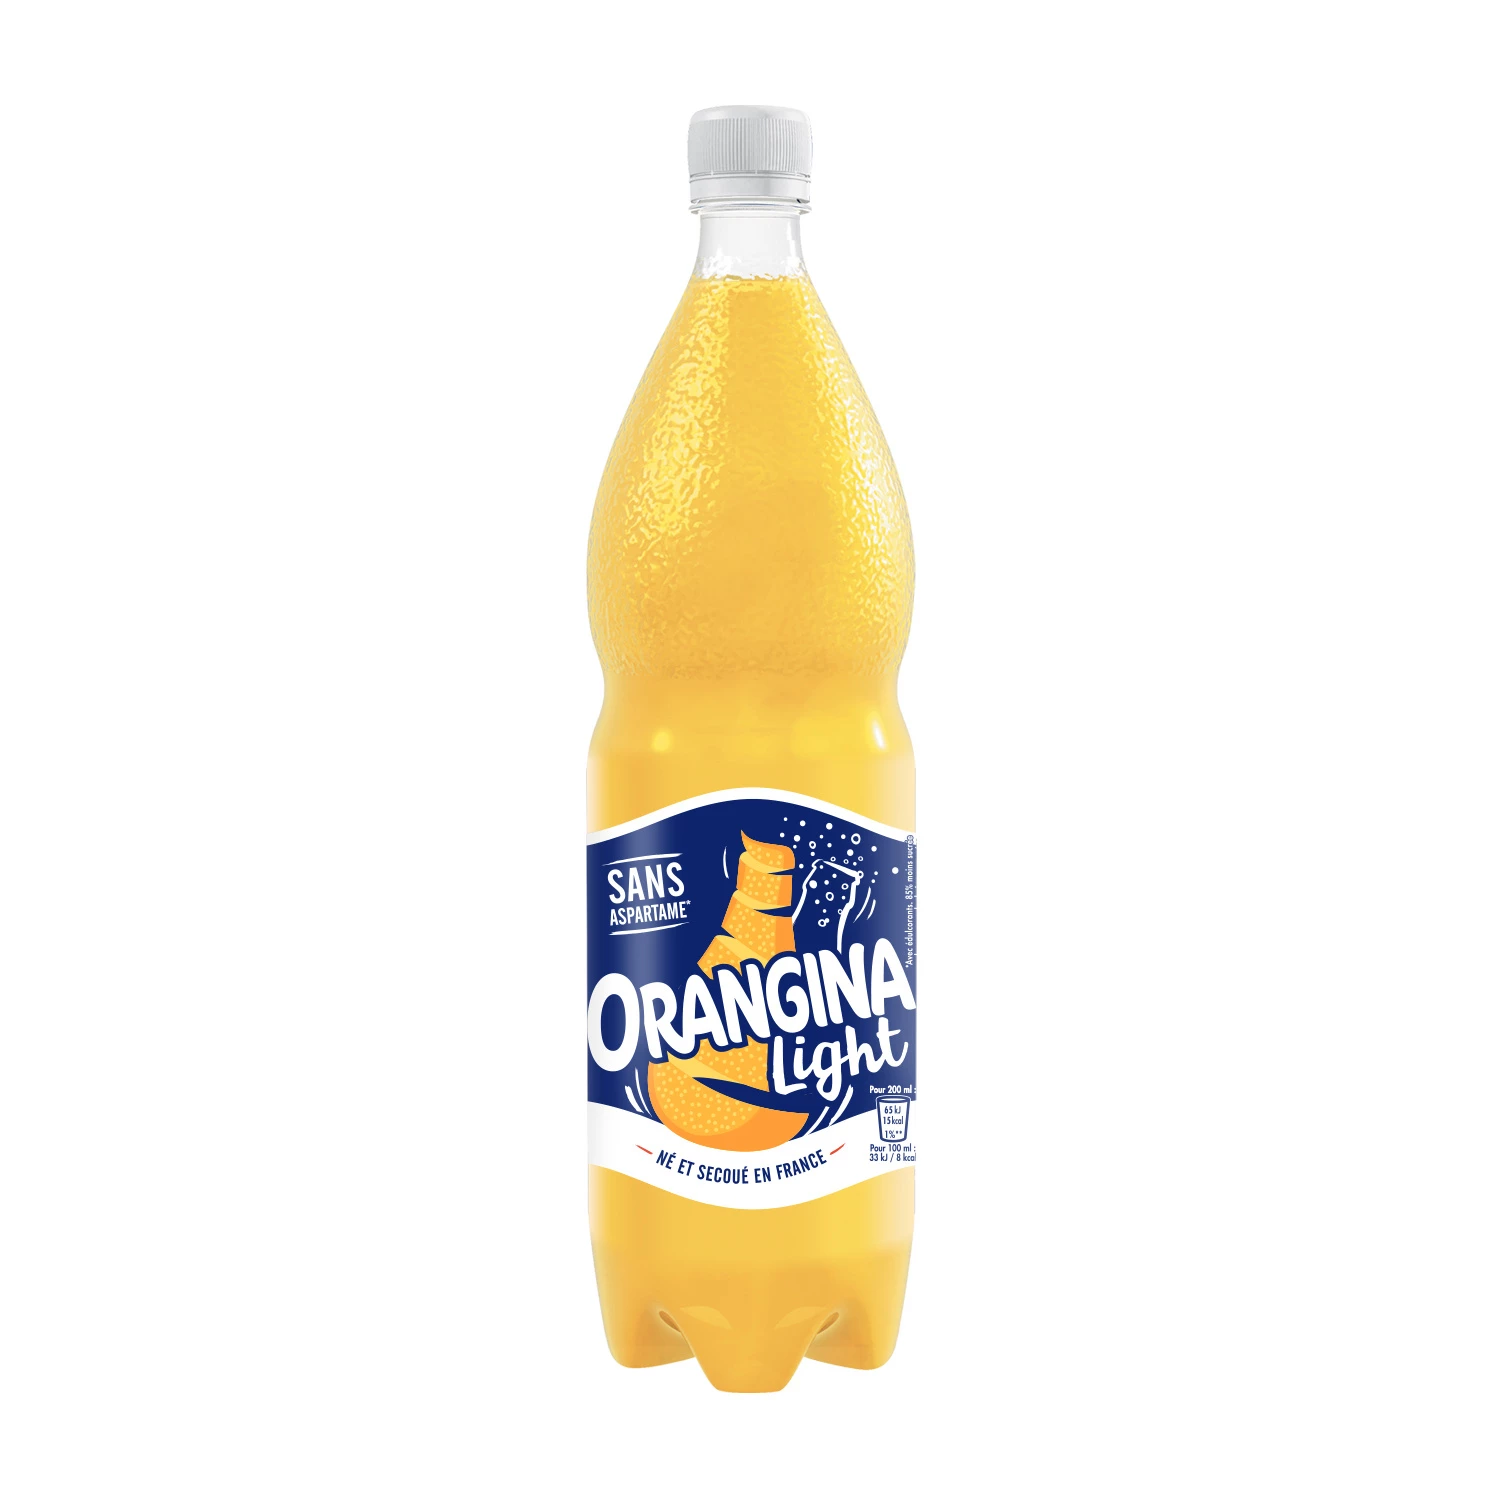 Soda d'orange zéro 1,5L - ORANGINA